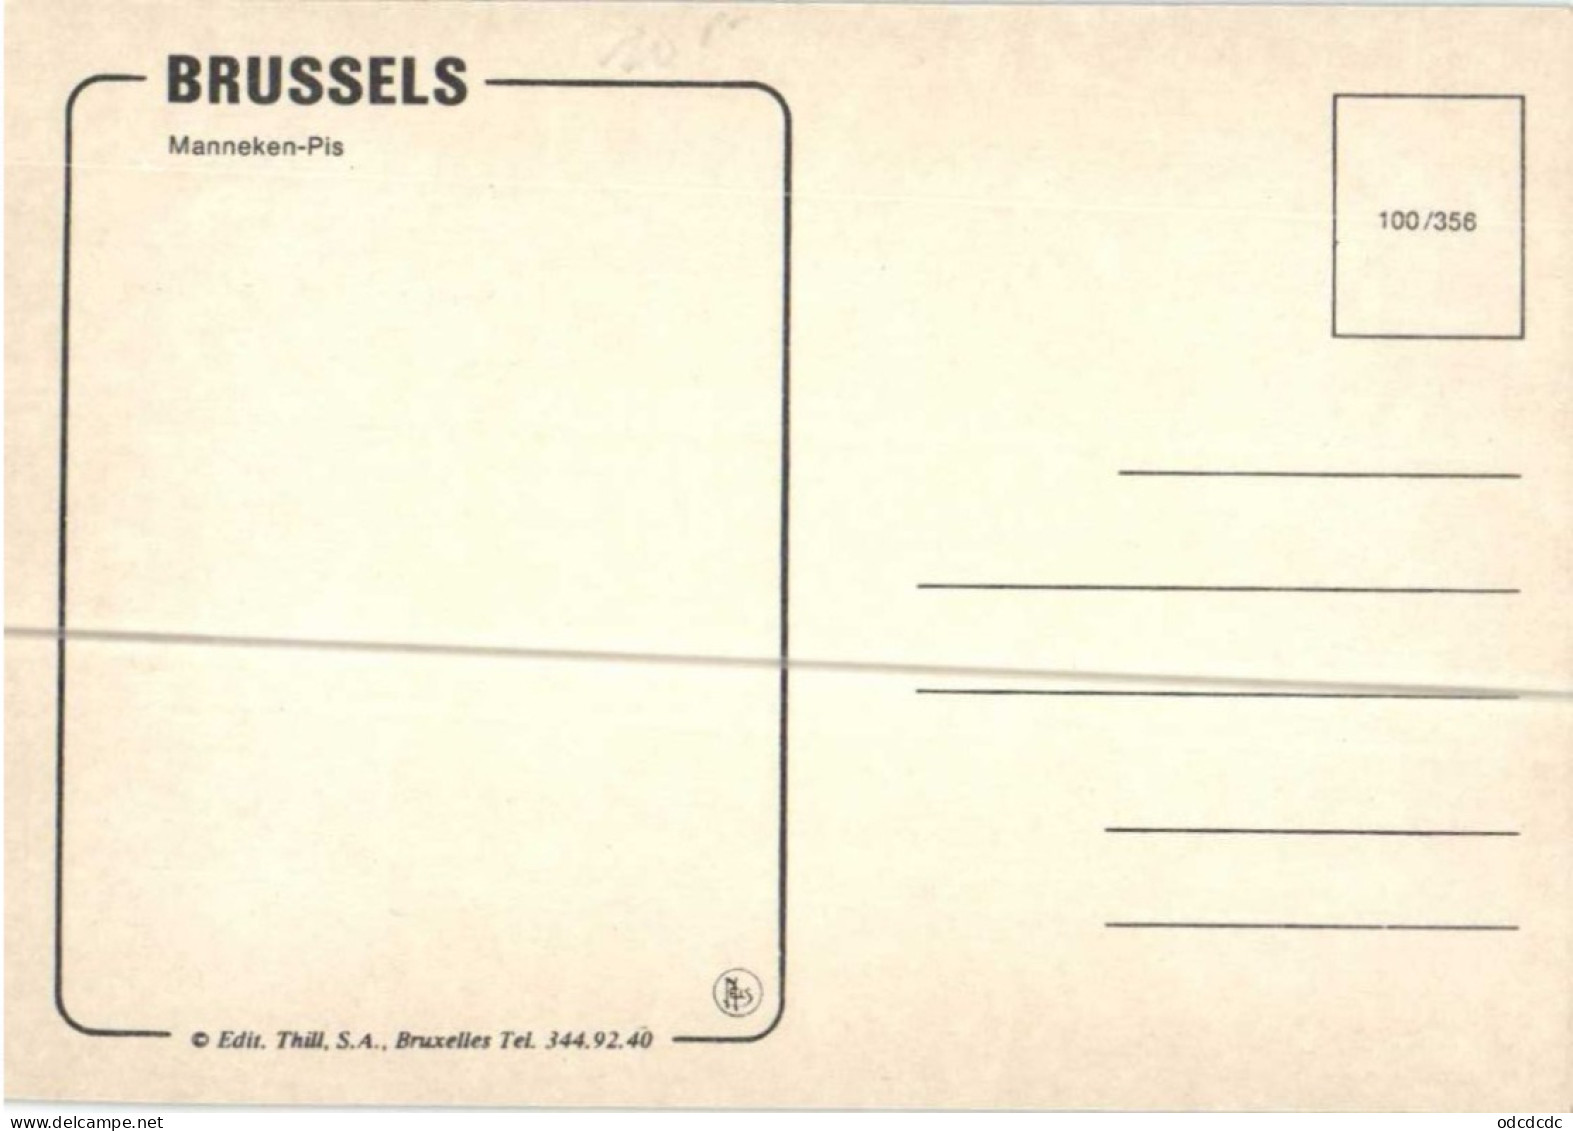 BRUSSELS Manneken-Pis RV - Monuments